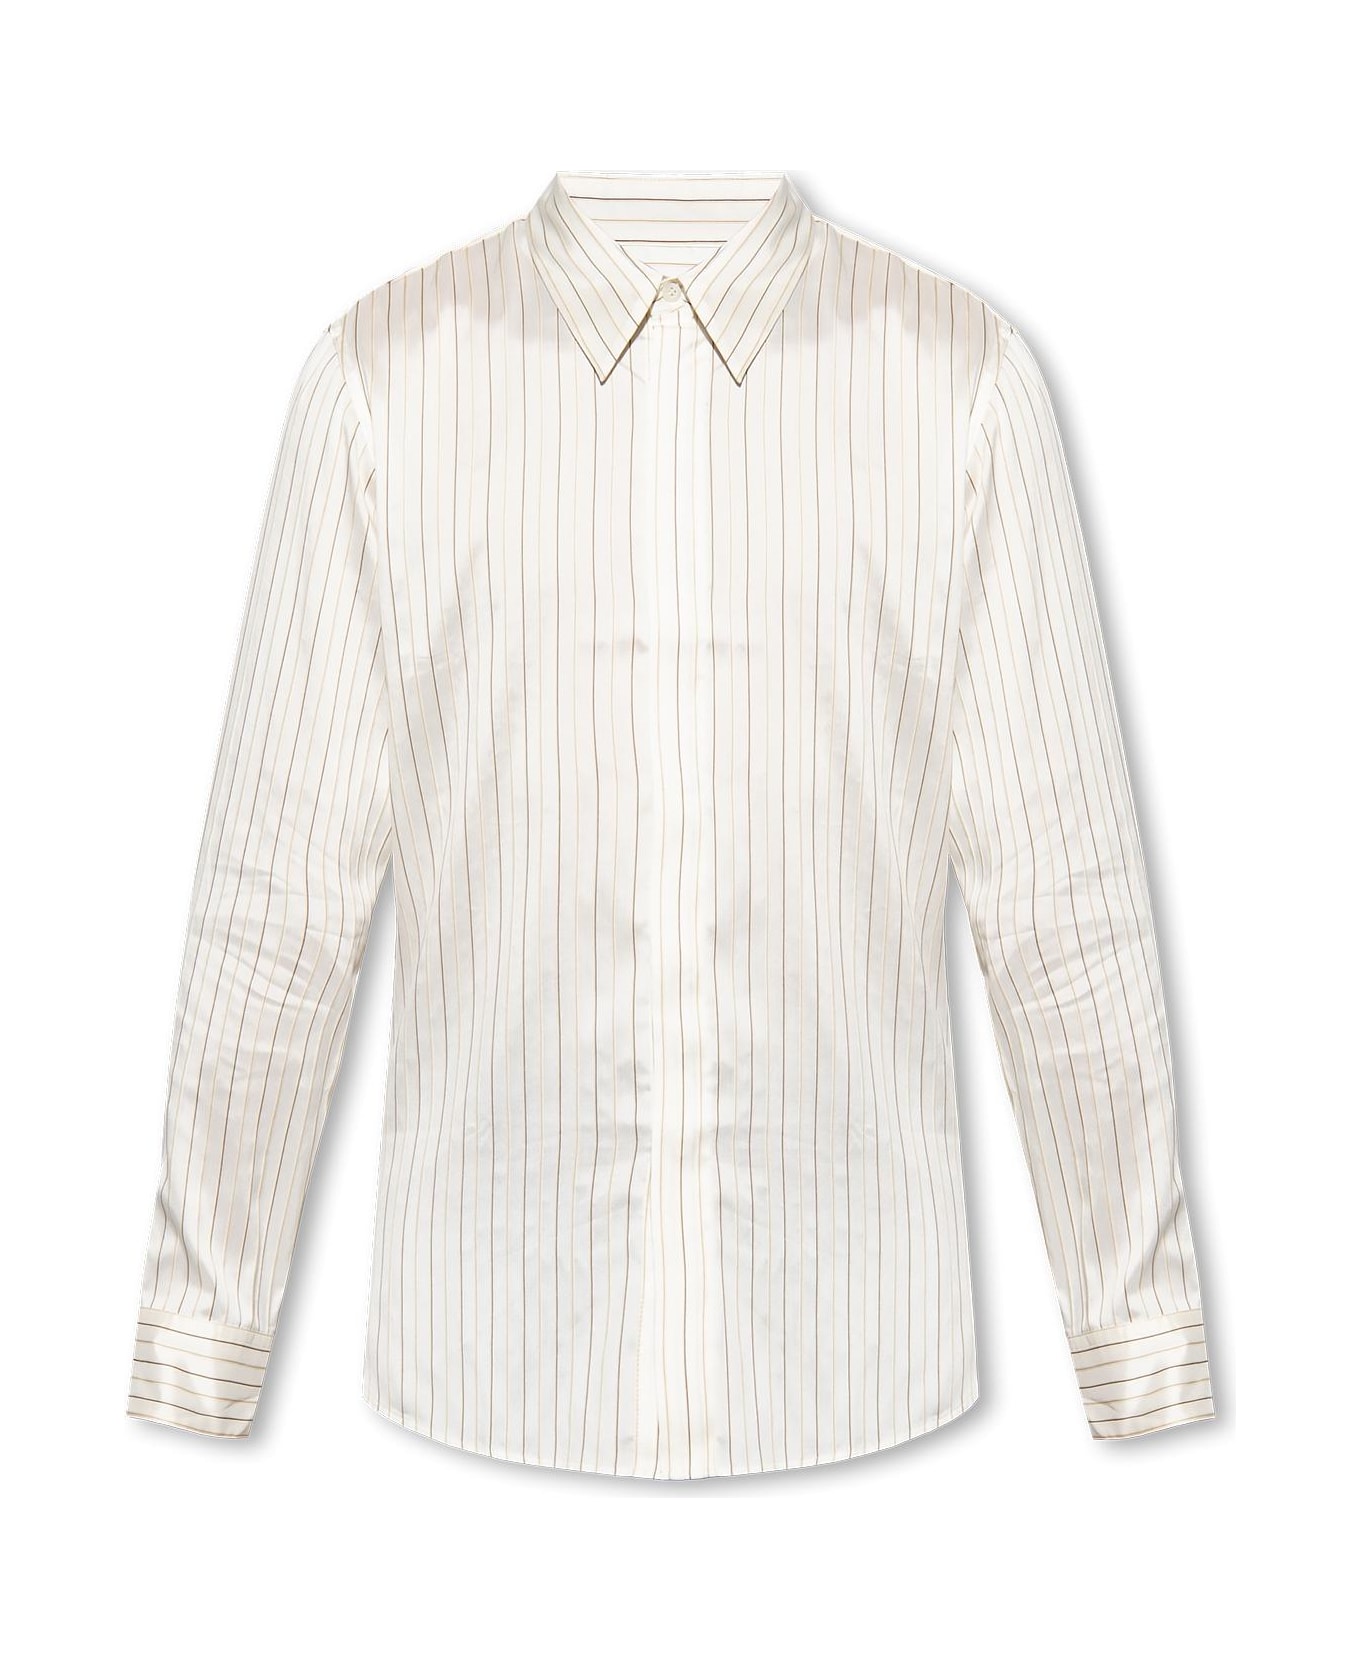 Dries Van Noten Pinstripe Shirt - White